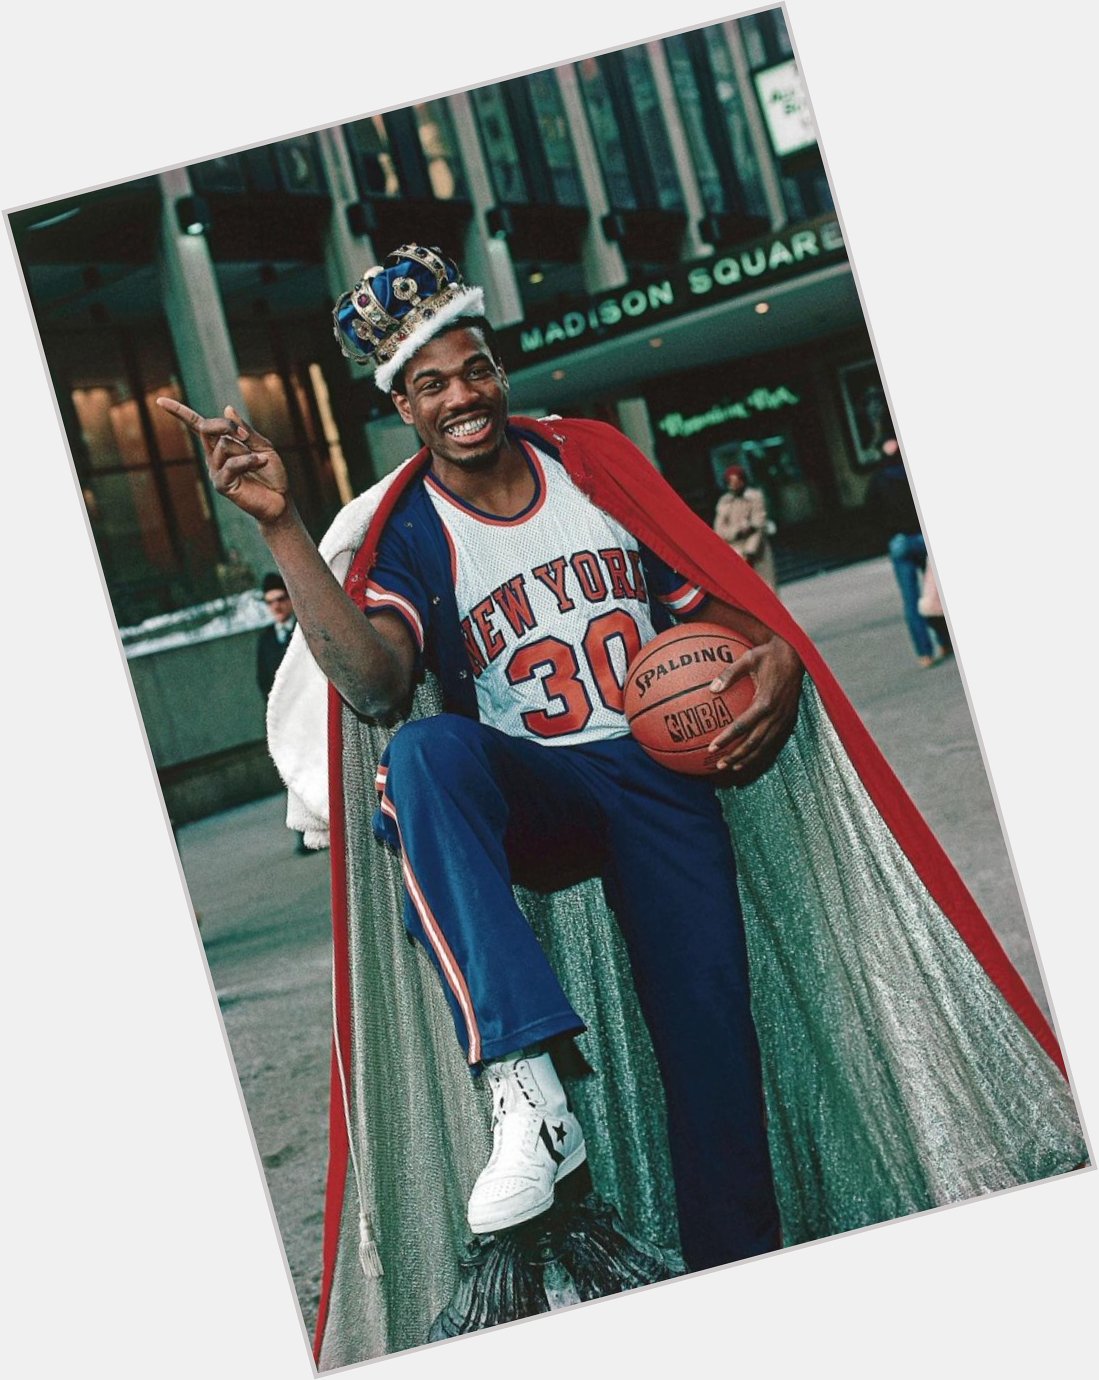 Happy 59th Birthday to one of the NBA\s greatest scorers Bernard King! 